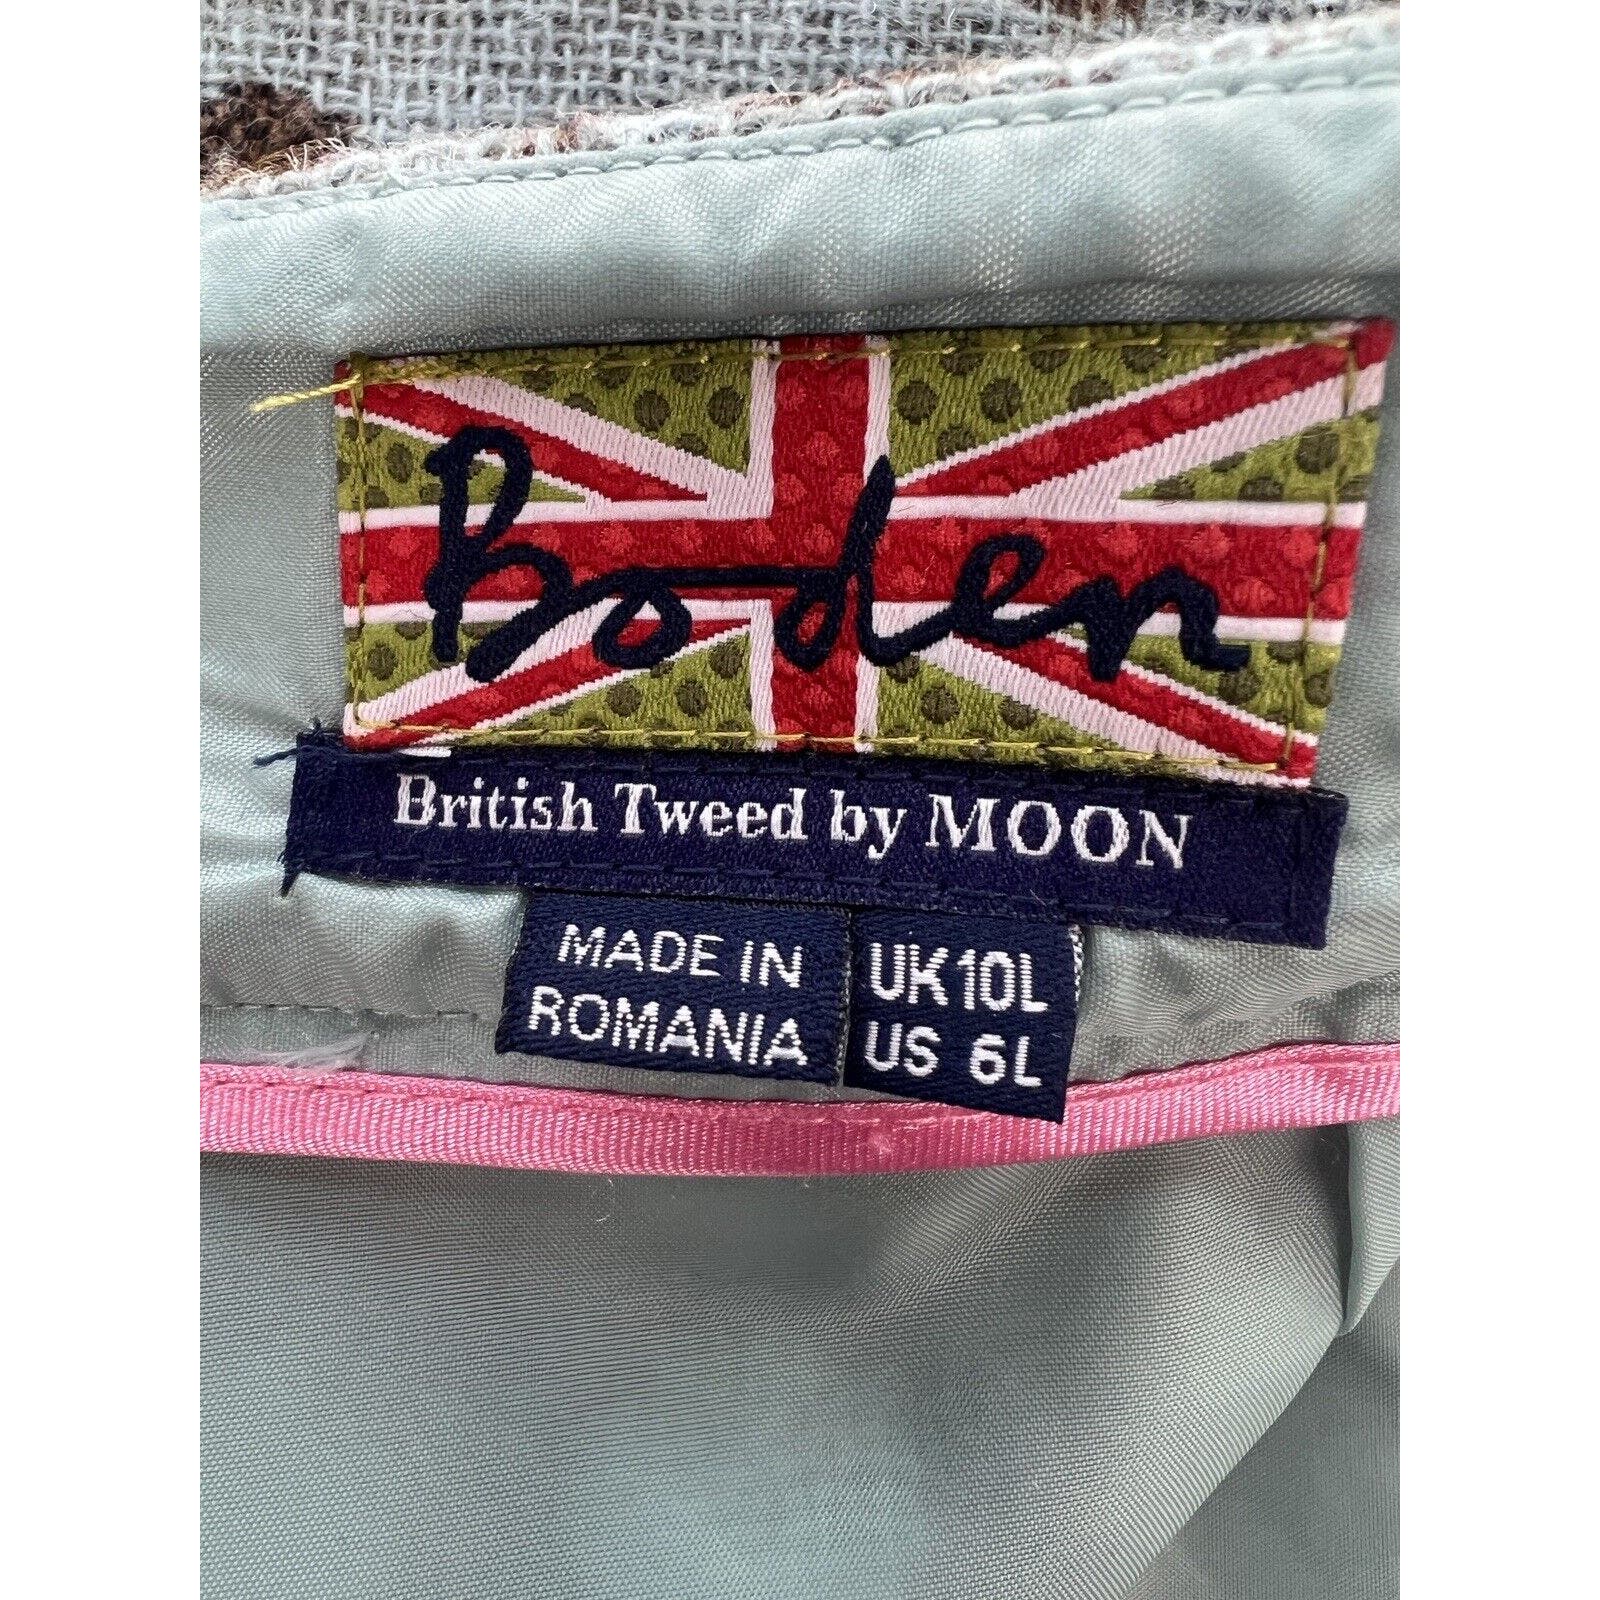 Boden Wool Skirt Women’s Size 6 British Tweed By Moon Polka Dot Teal Brown